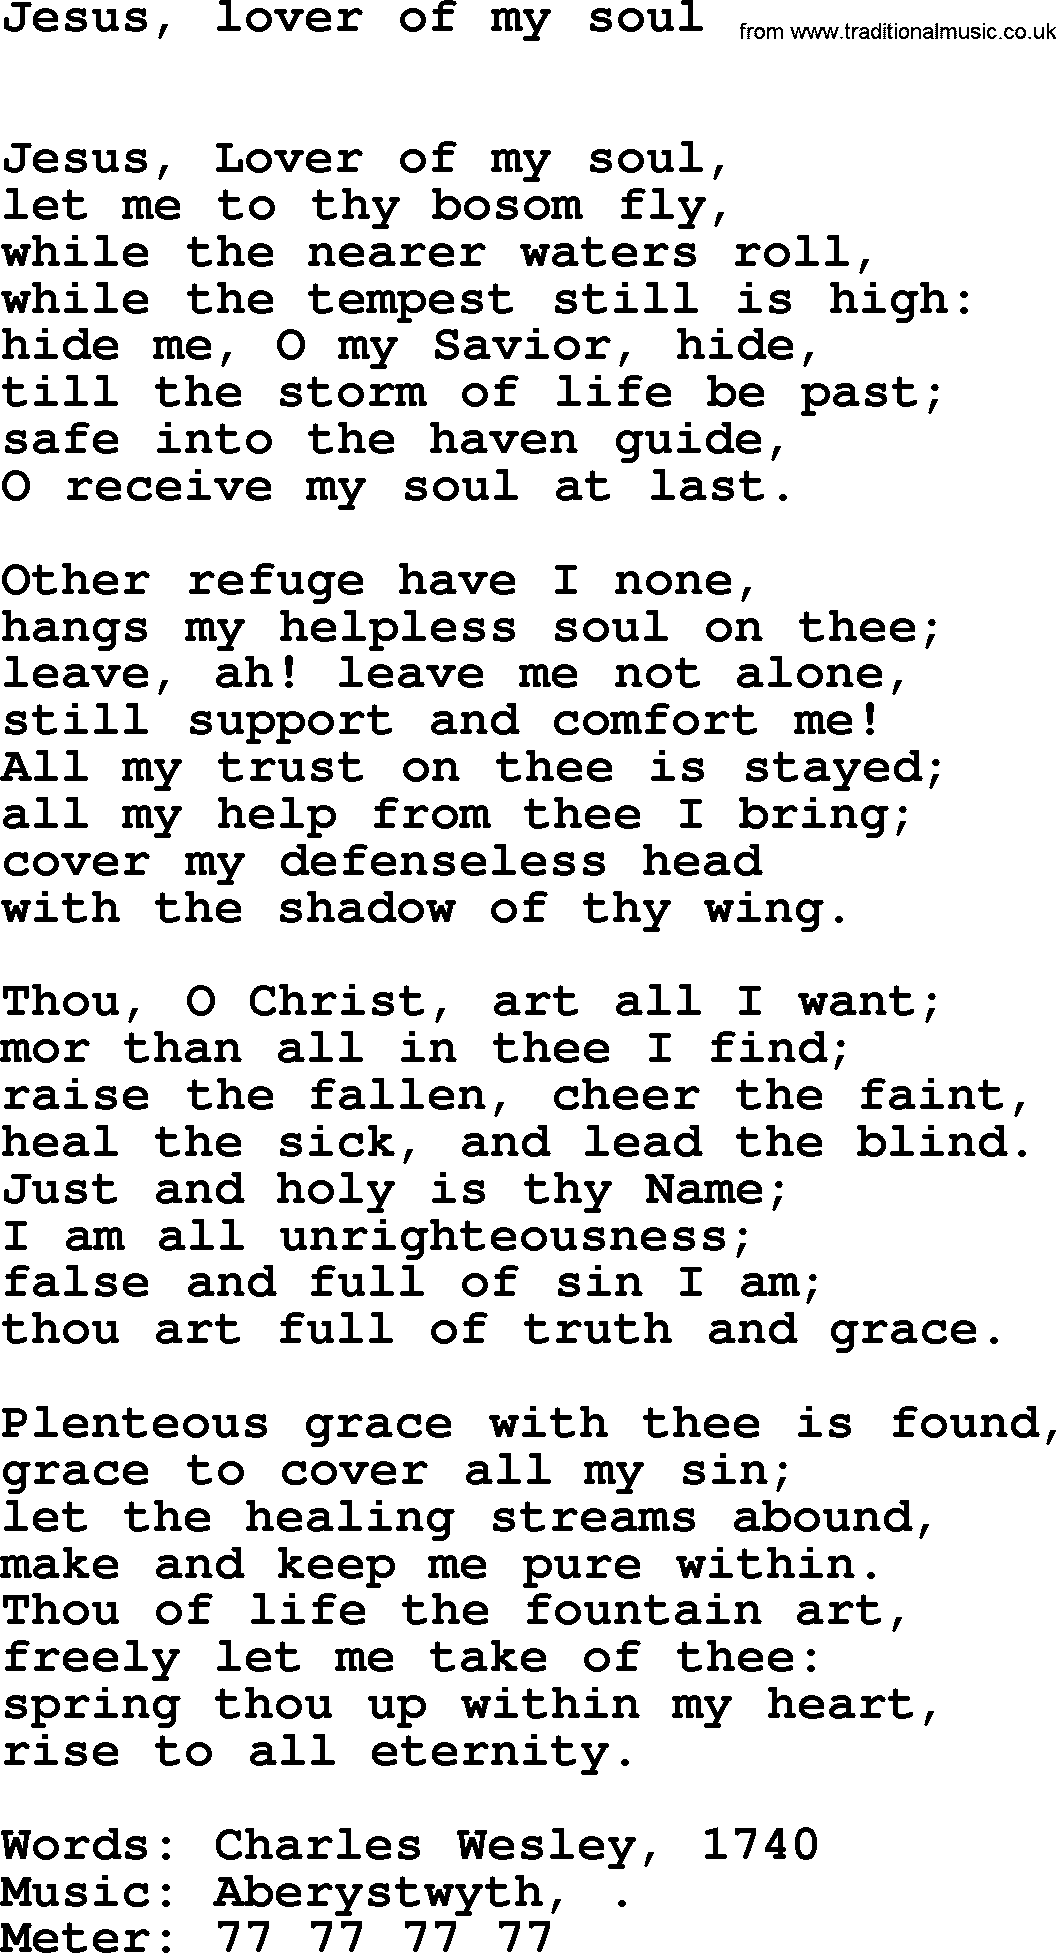 Book of Common Praise Hymn: Jesus, Lover Of My Soul.txt lyrics with midi music